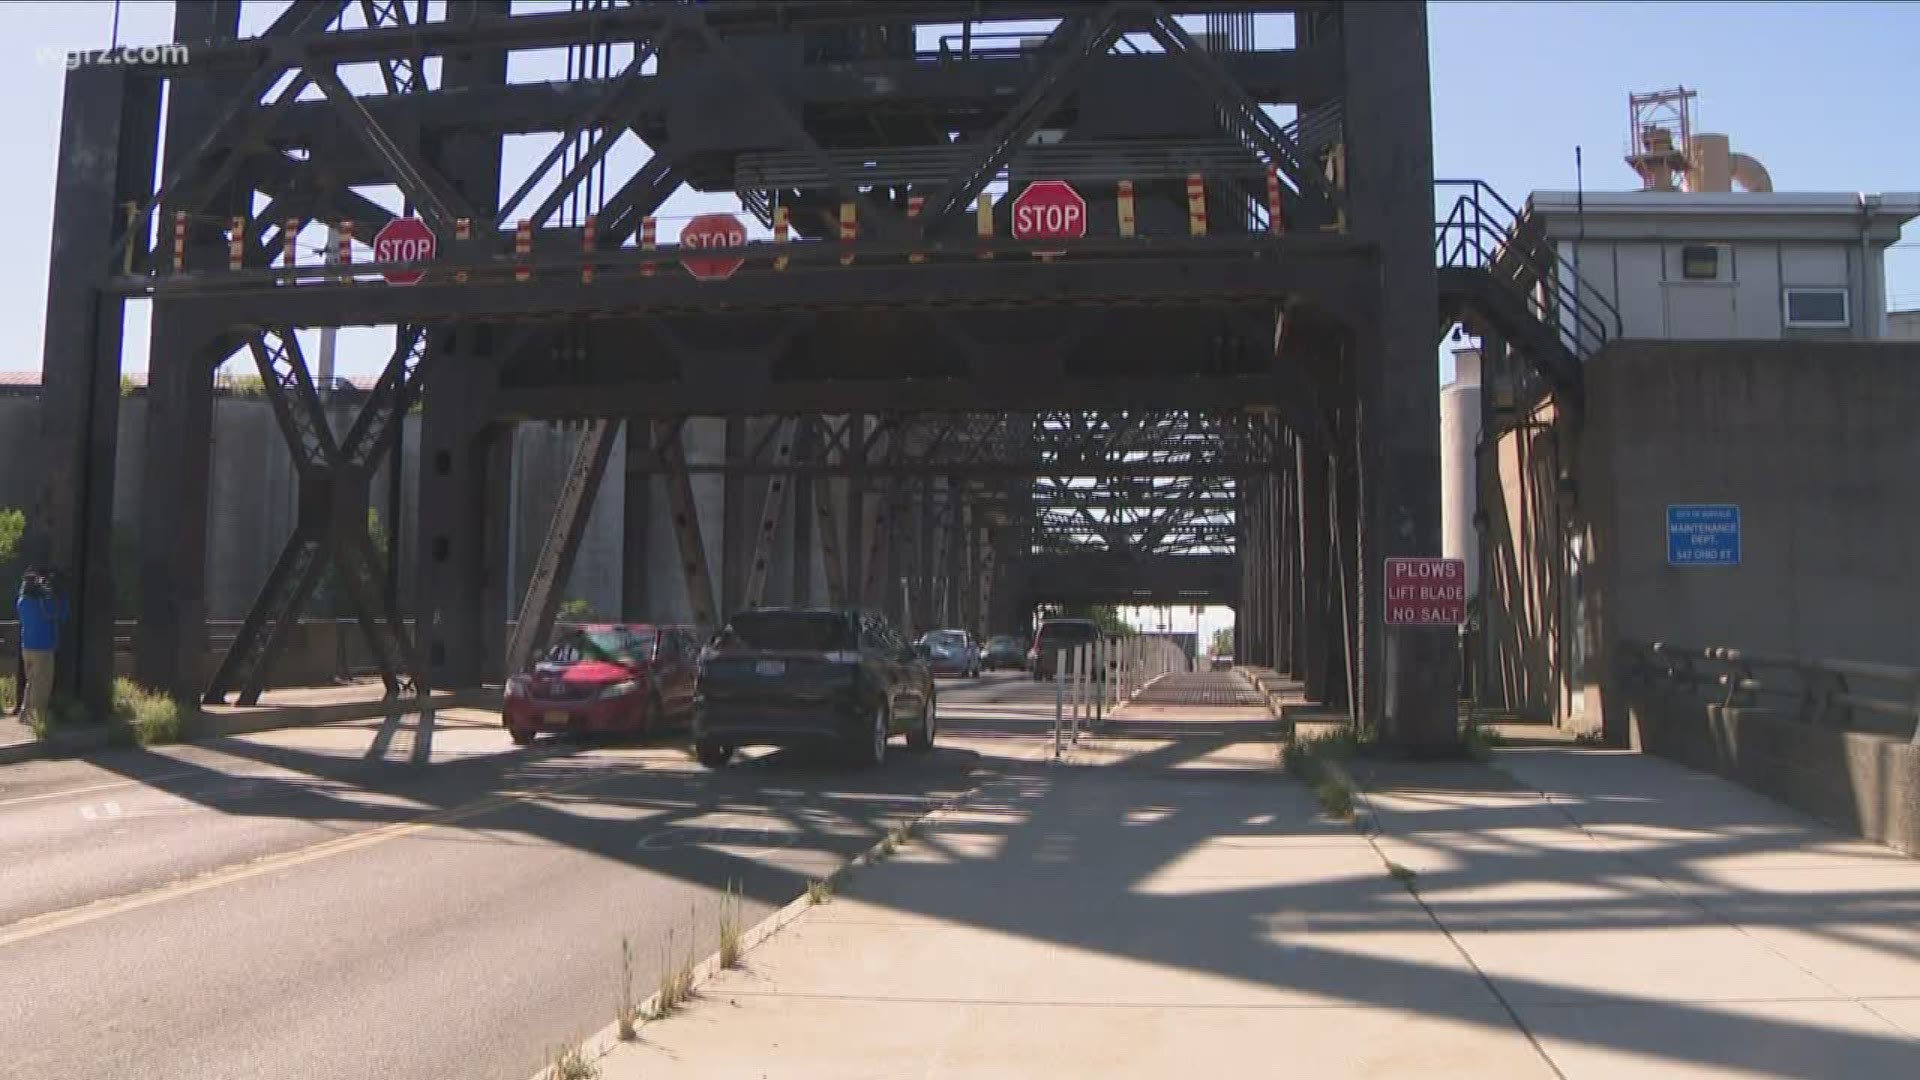 Ohio st. bridge getting a $10.6 million rehab